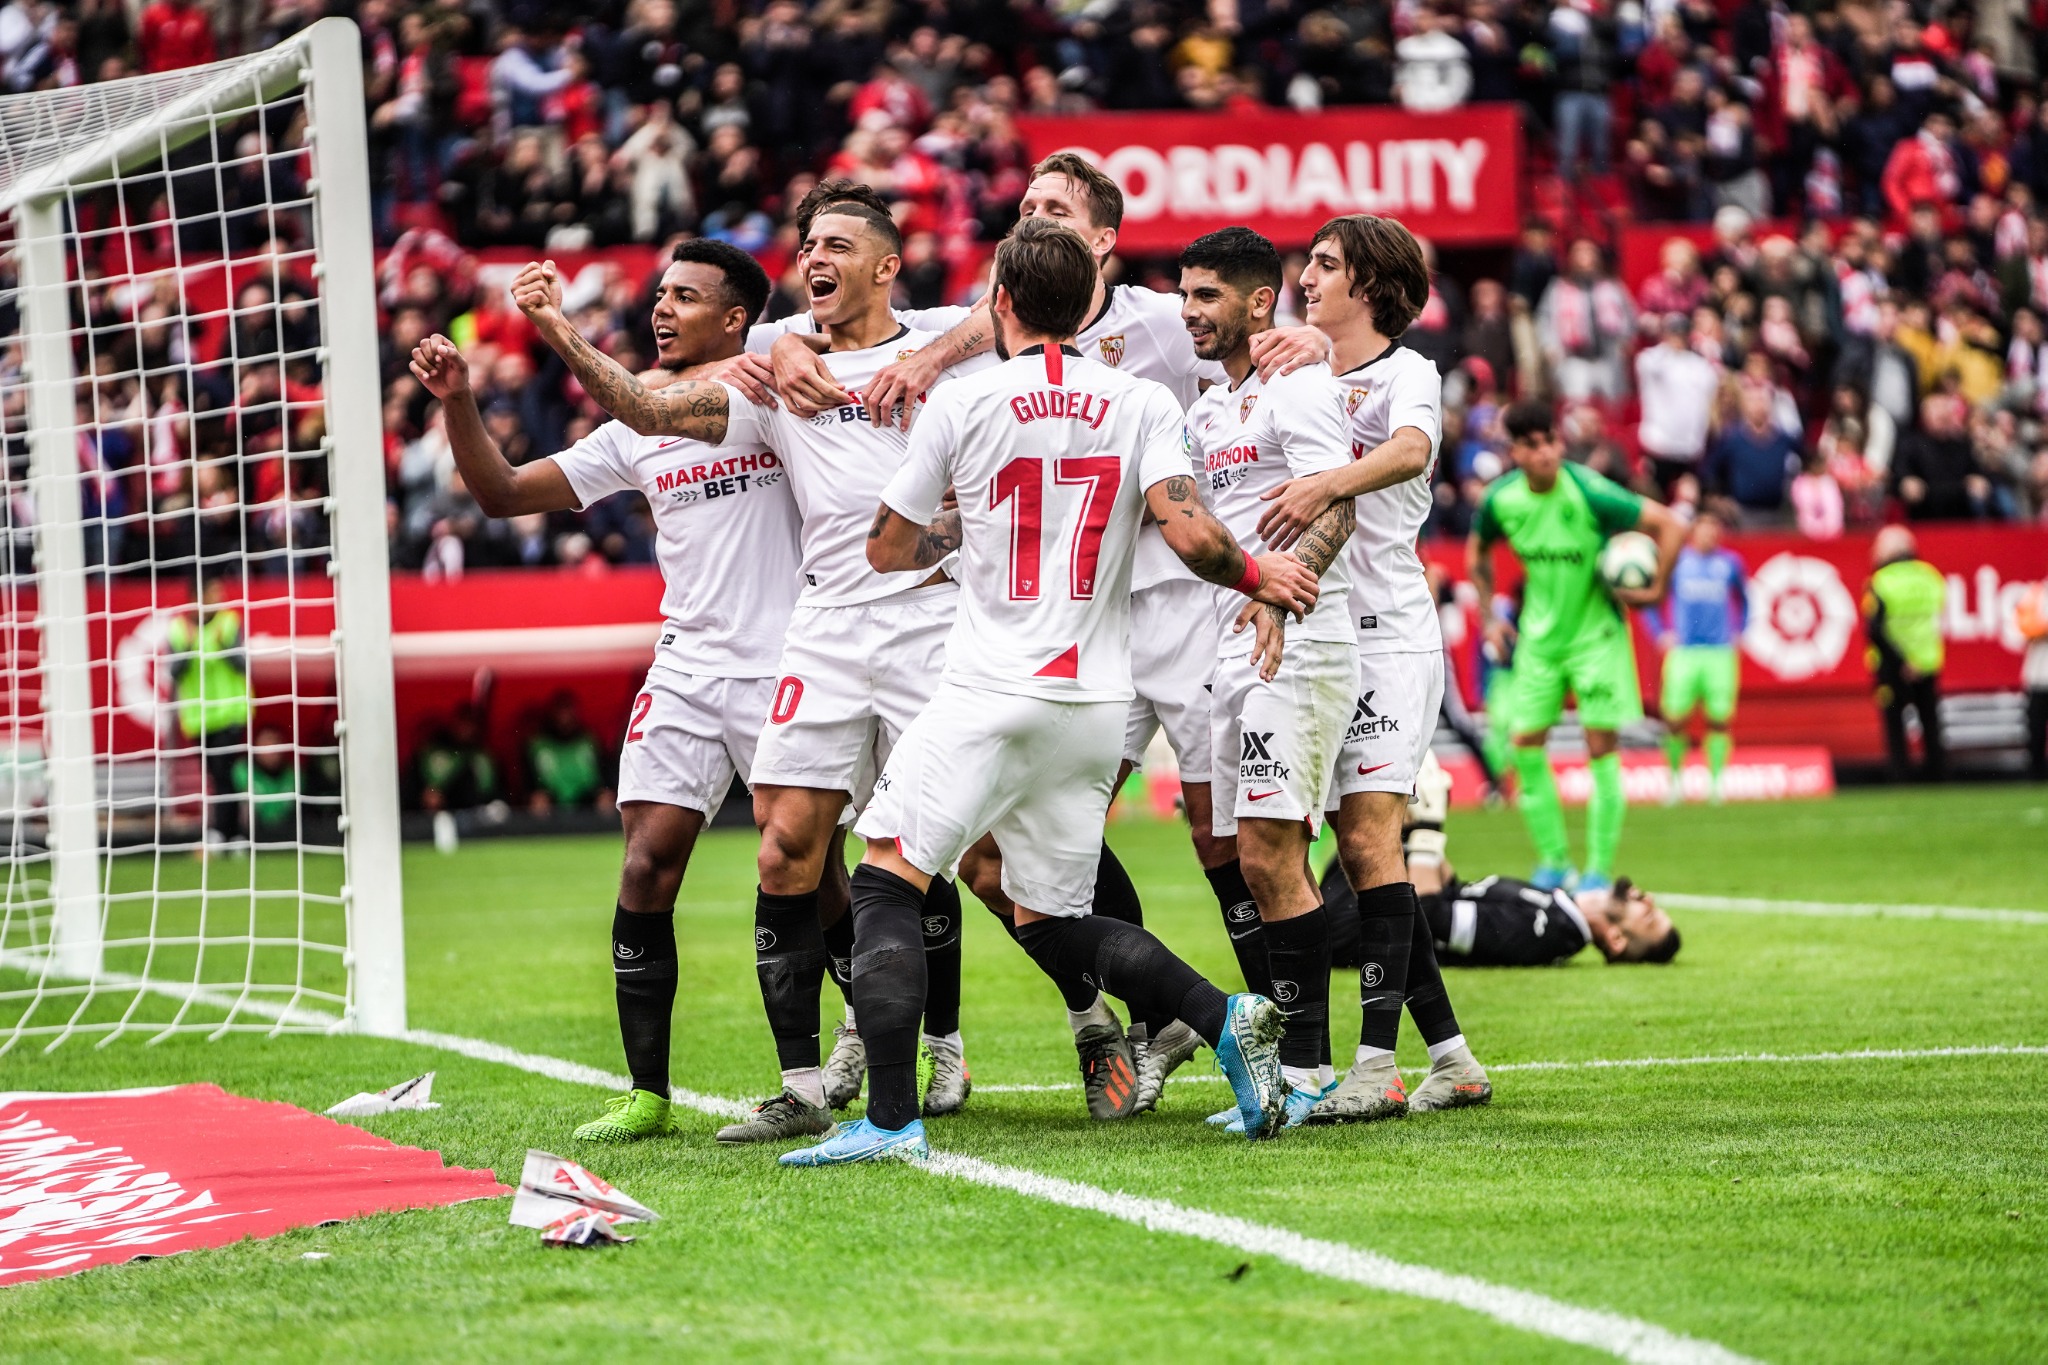 Sevilla FC celebrating in their win over CD Leganés